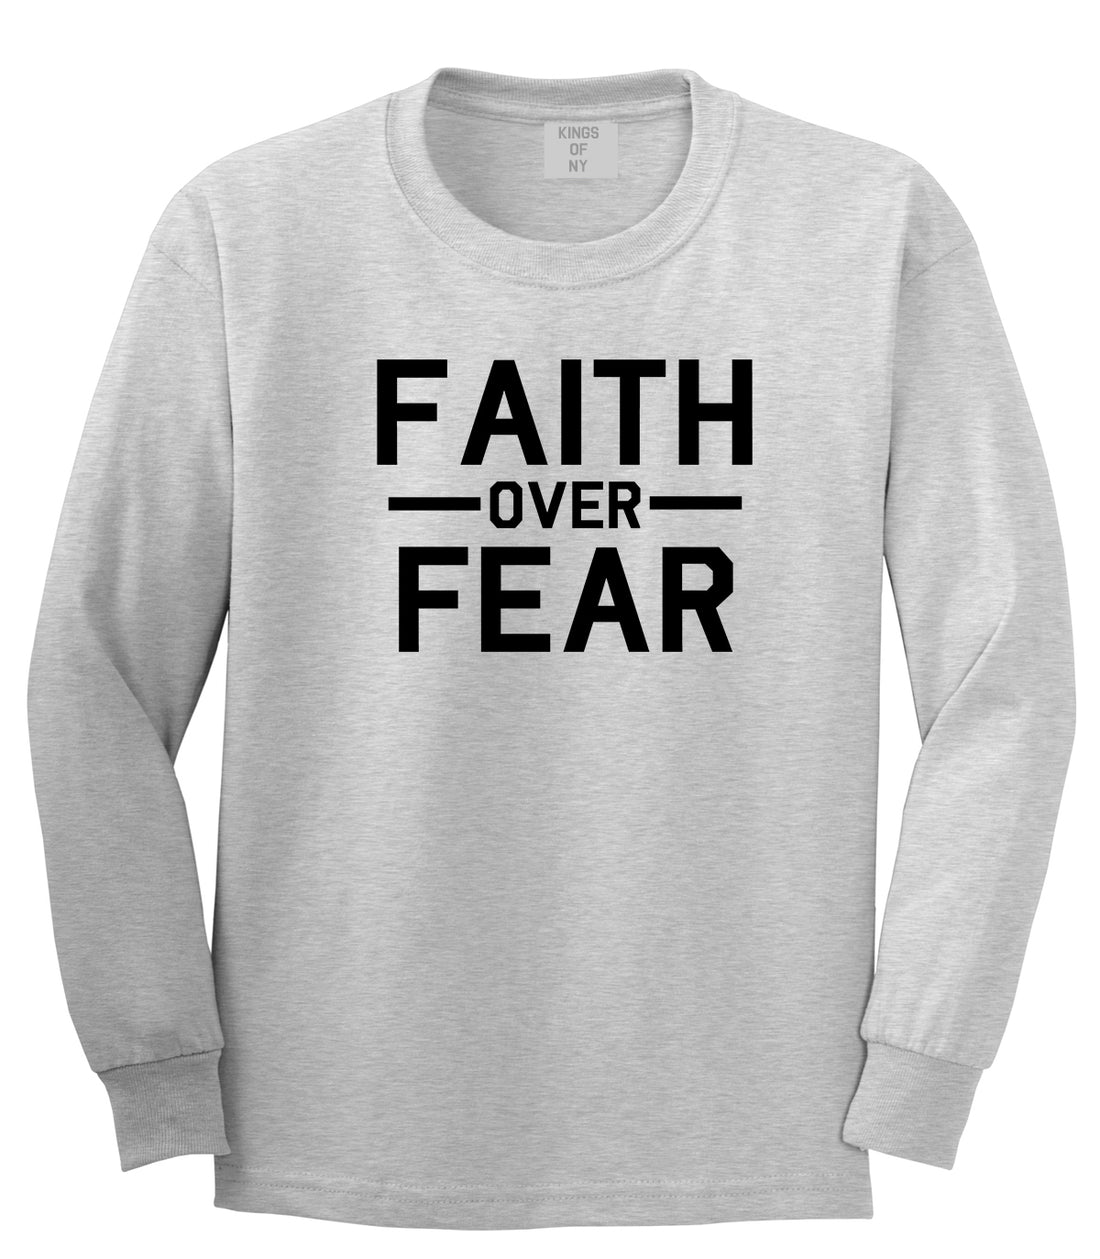 Faith Over Fear Mens Grey Long Sleeve T-Shirt by KINGS OF NY